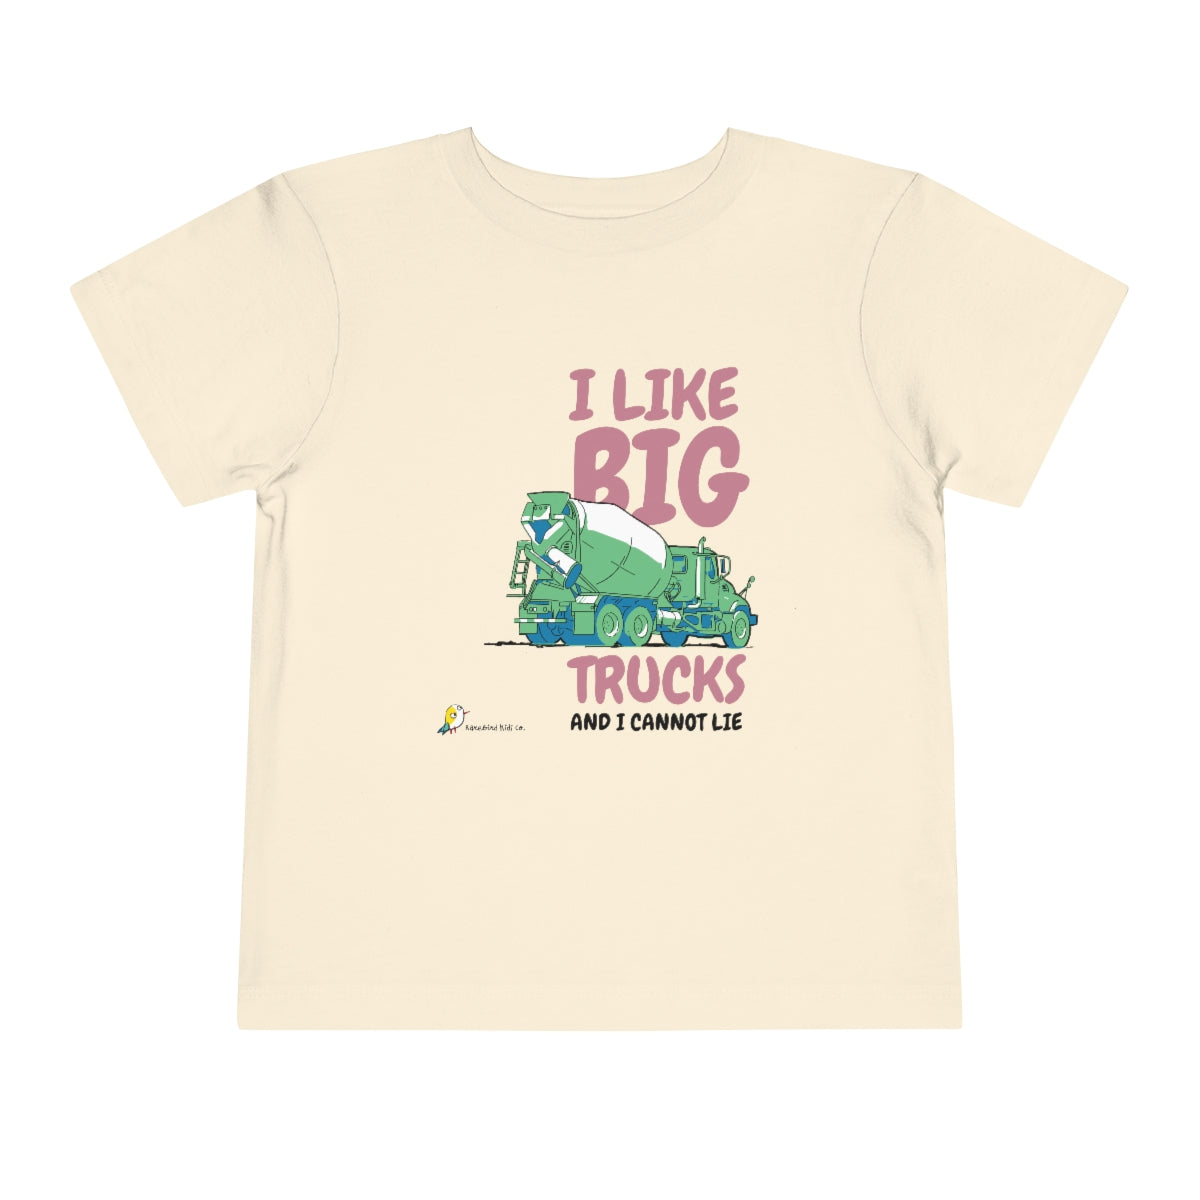 I Like Big Trucks and I Cannot Lie – t-shirt for self-affirmation - toddler sizes (2-5)